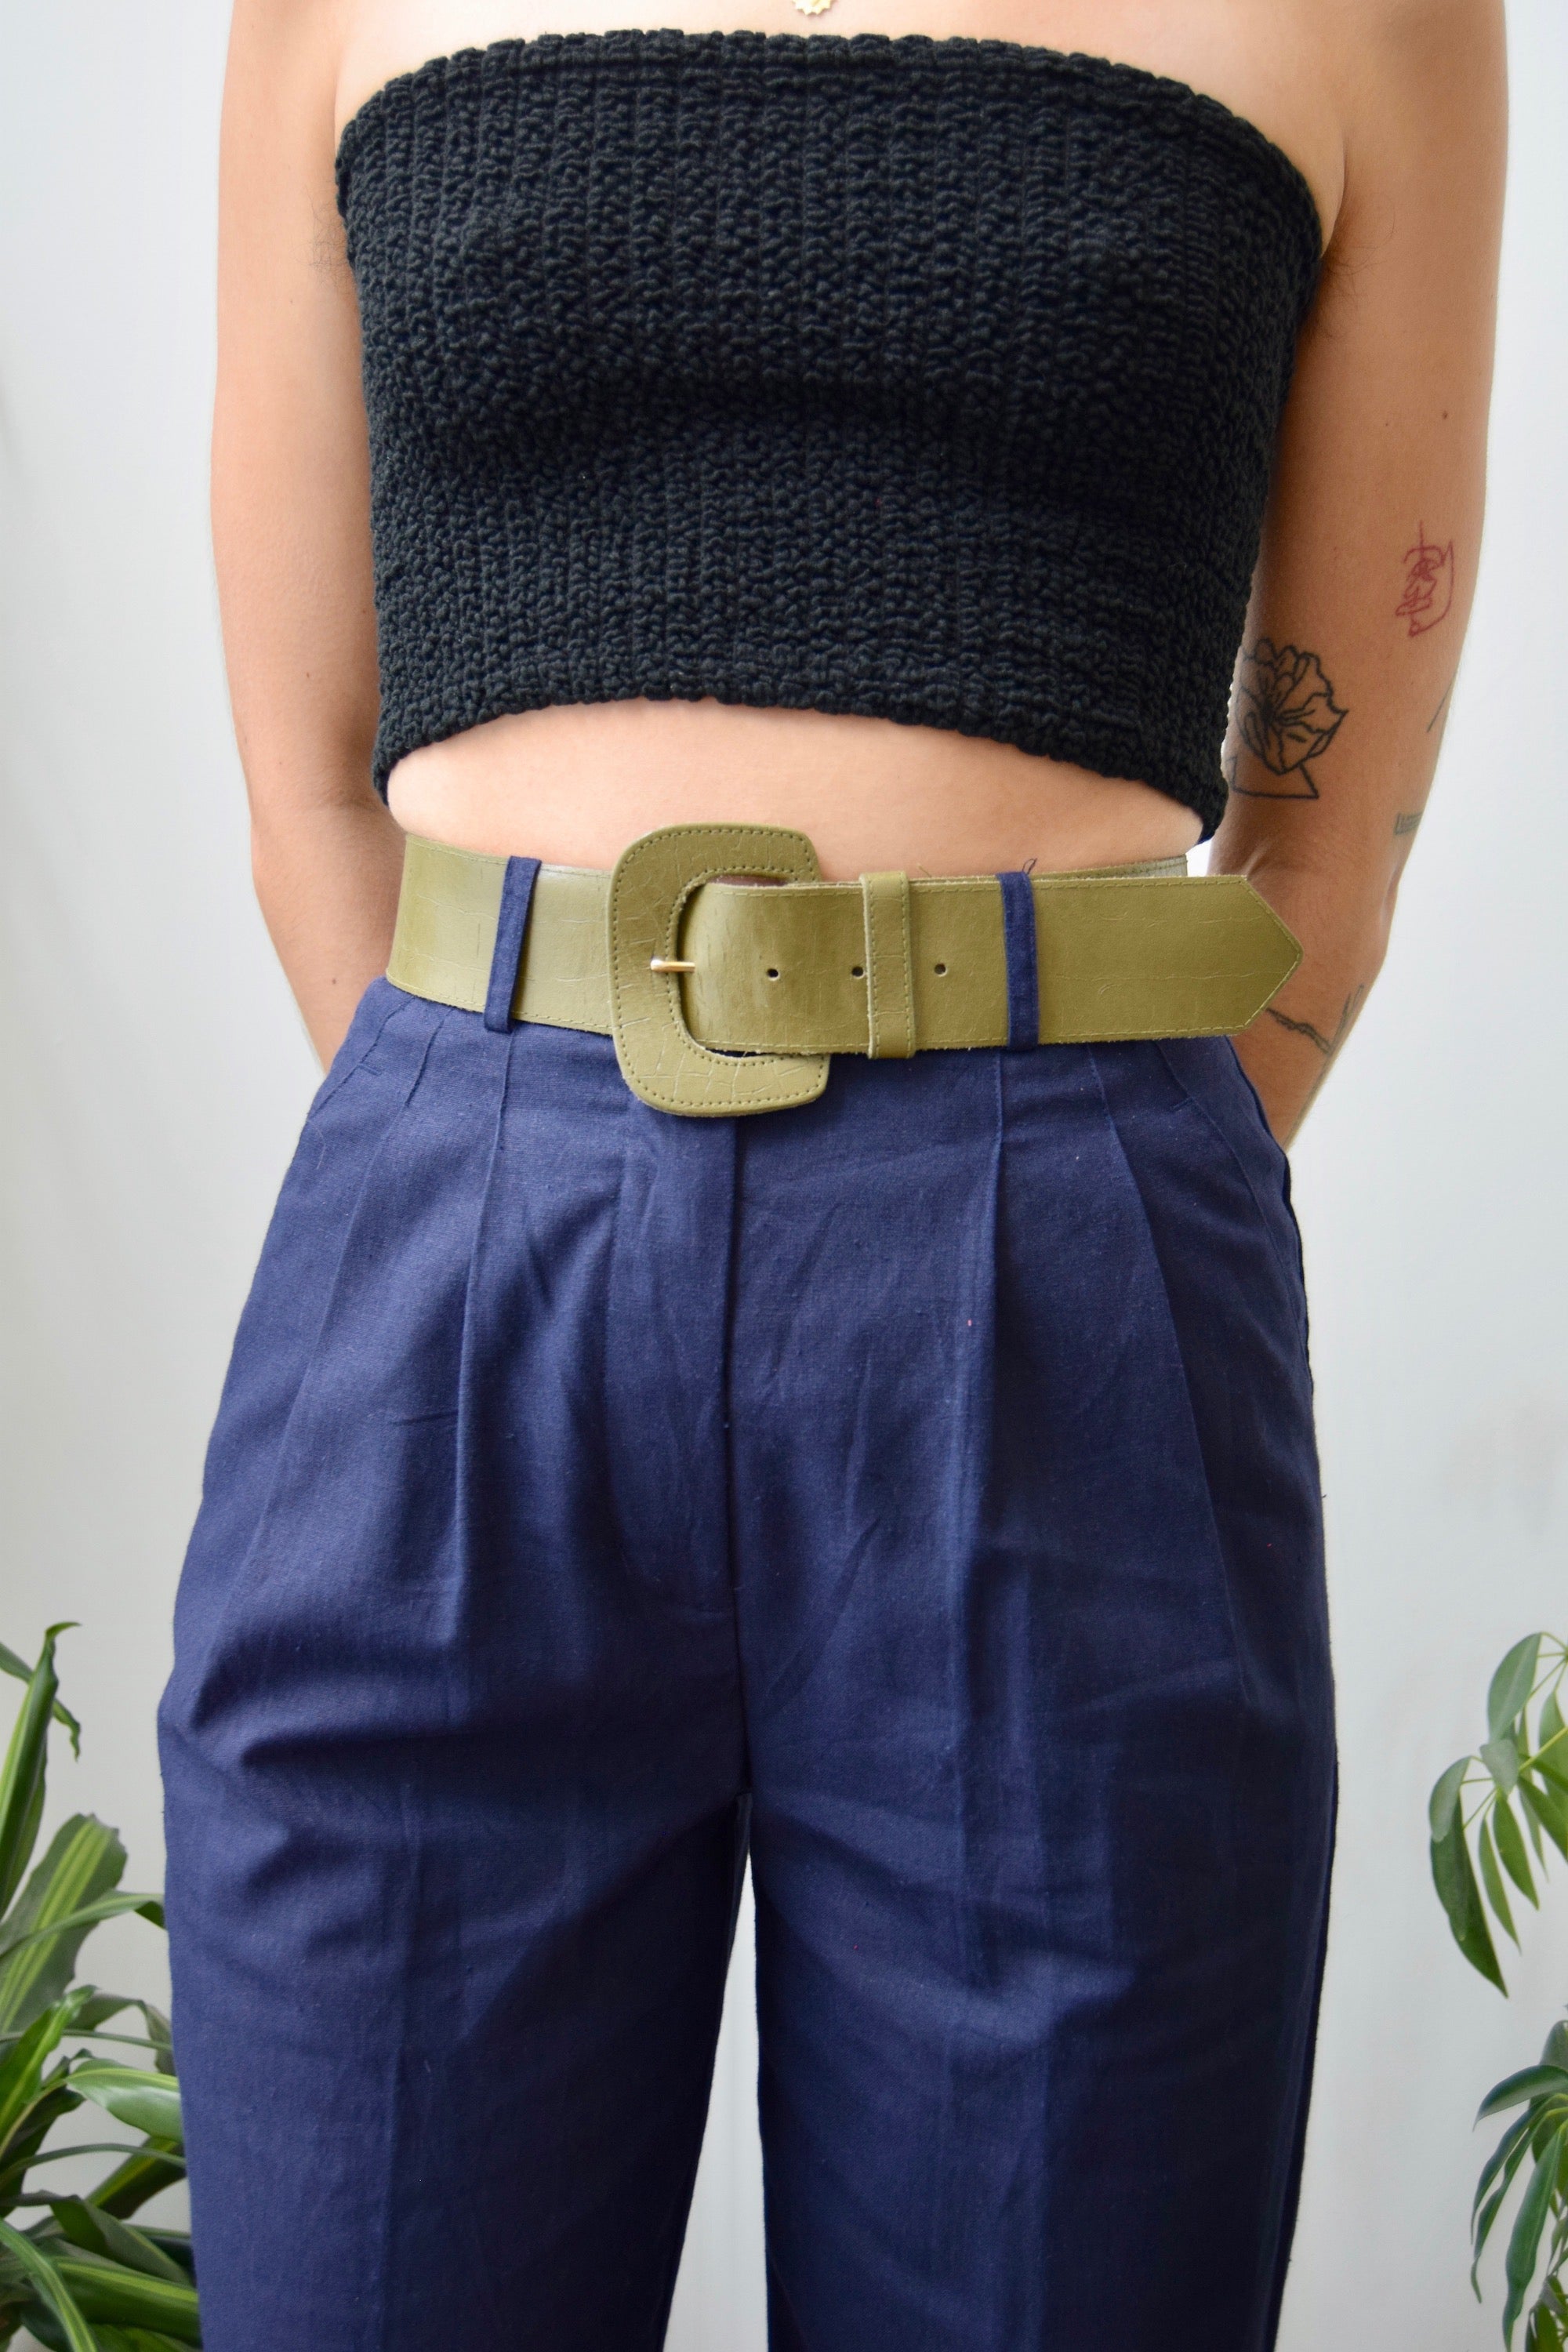 Moss Leather Belt